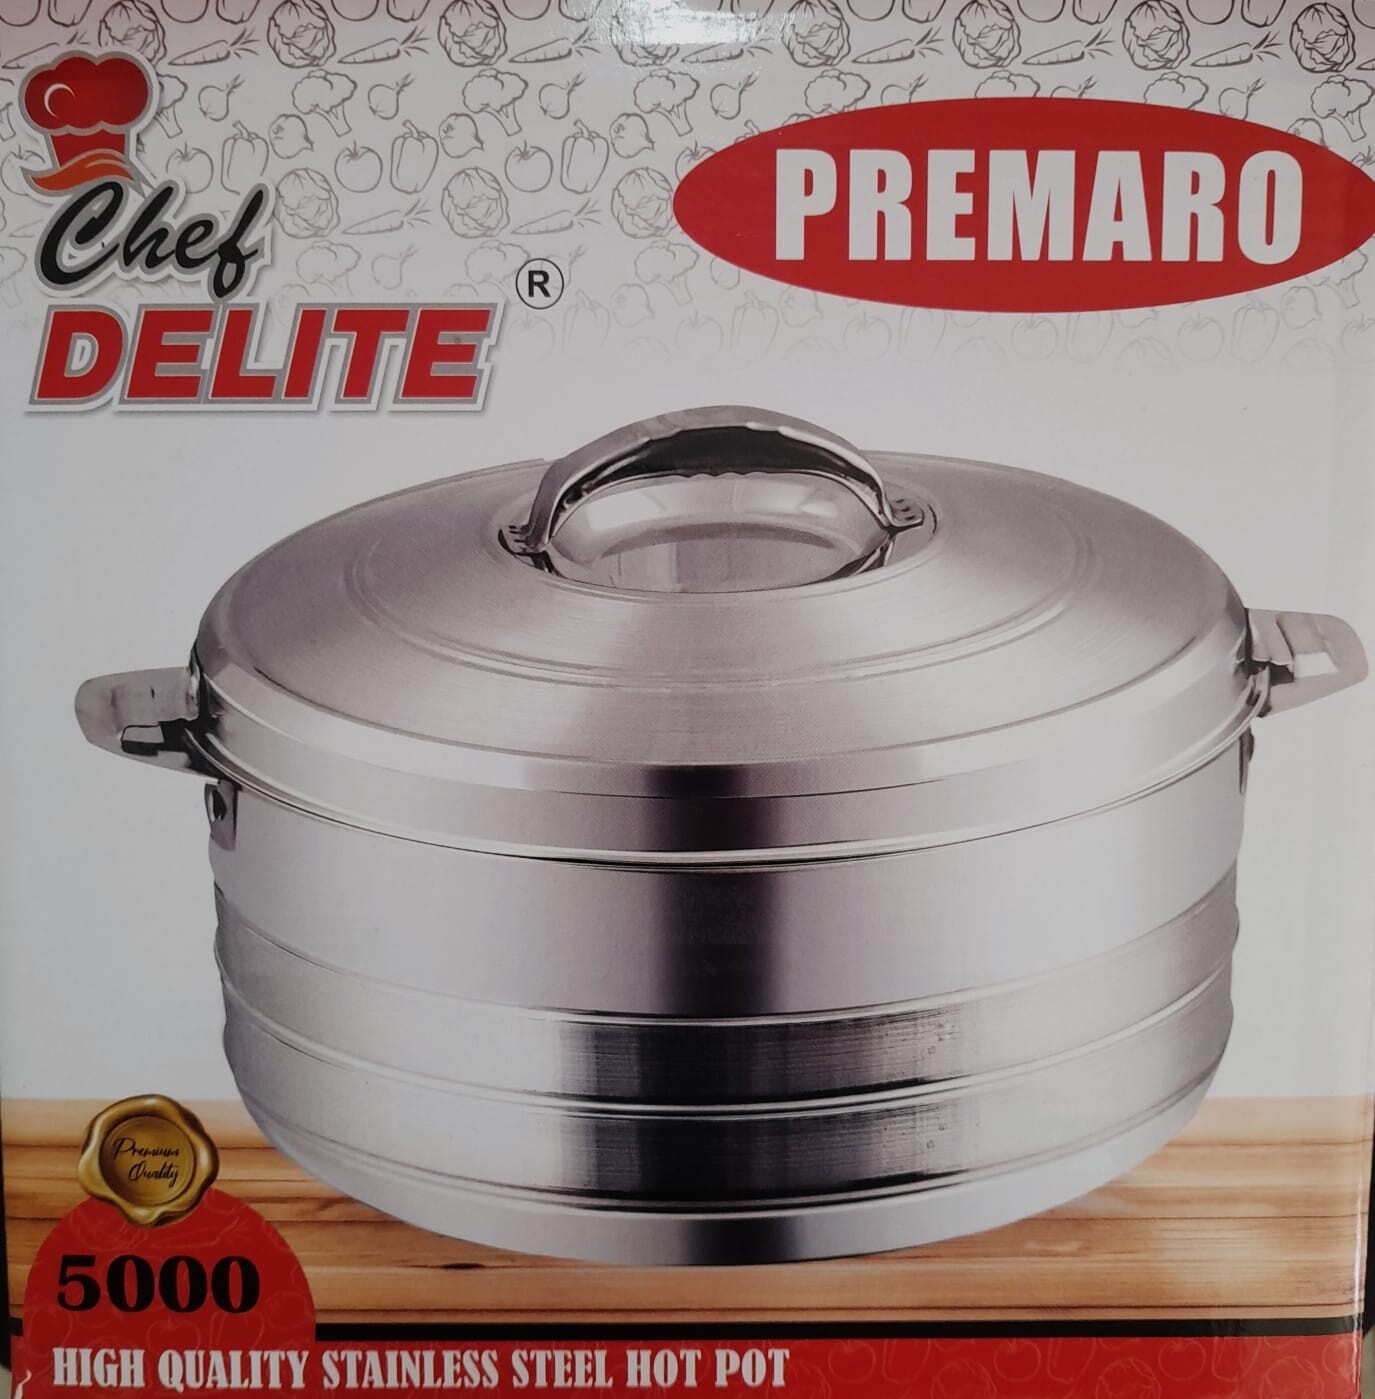 Chef delite stainless steel Hot Pot 5L Premaro